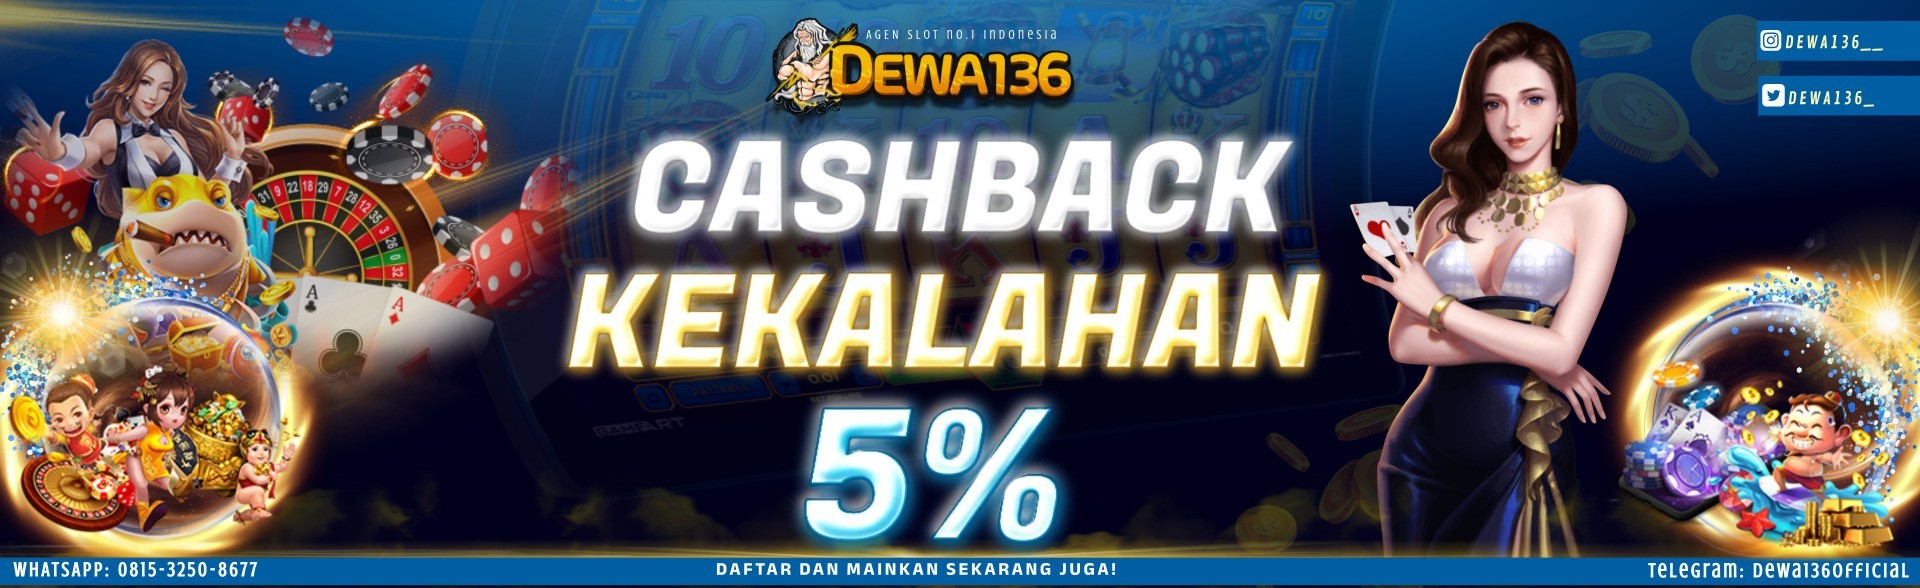 Cashback 5%